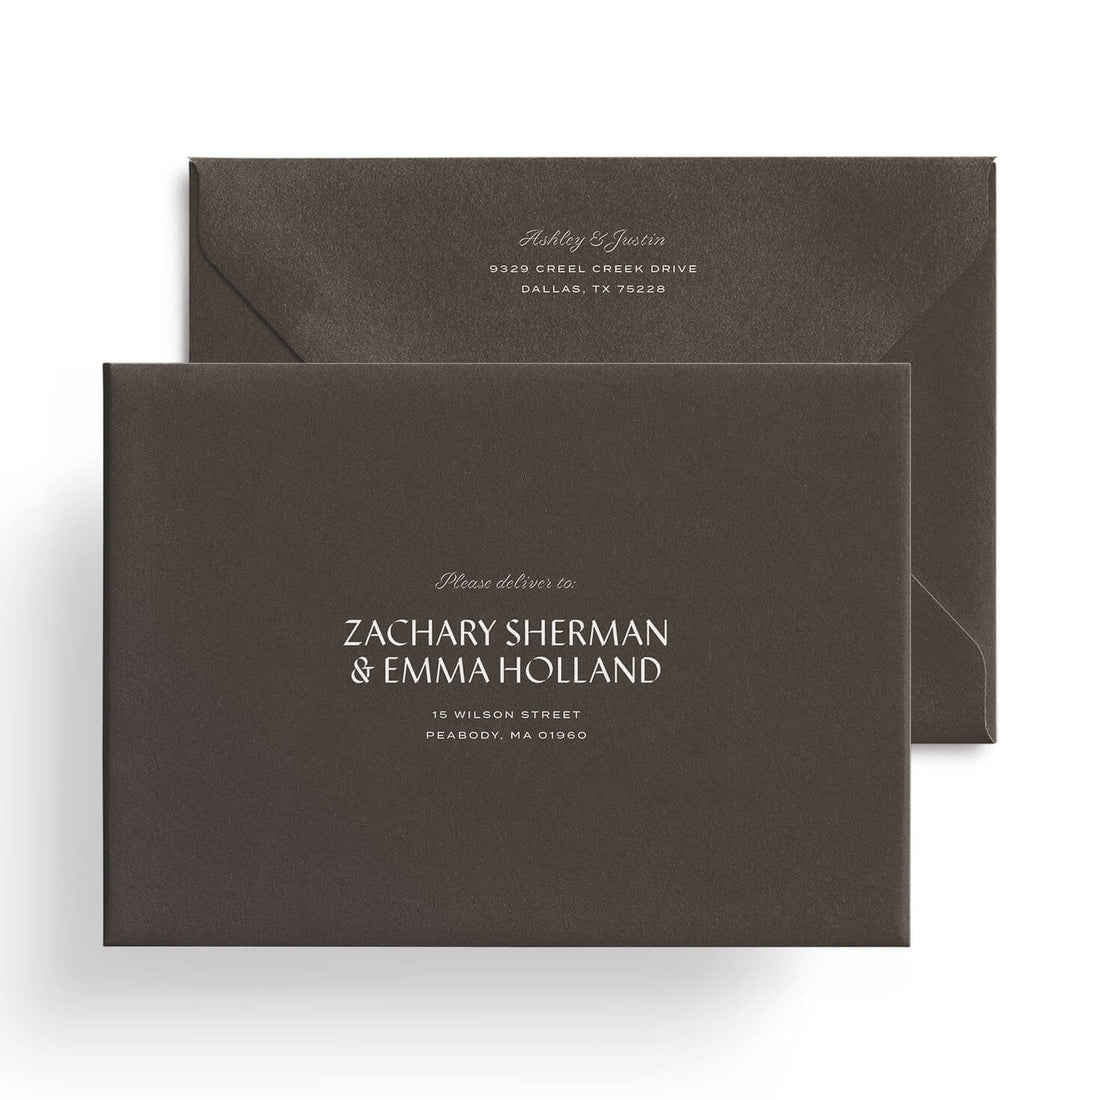 Digital address printing for wedding invitations inspired by Dallas, Texas.